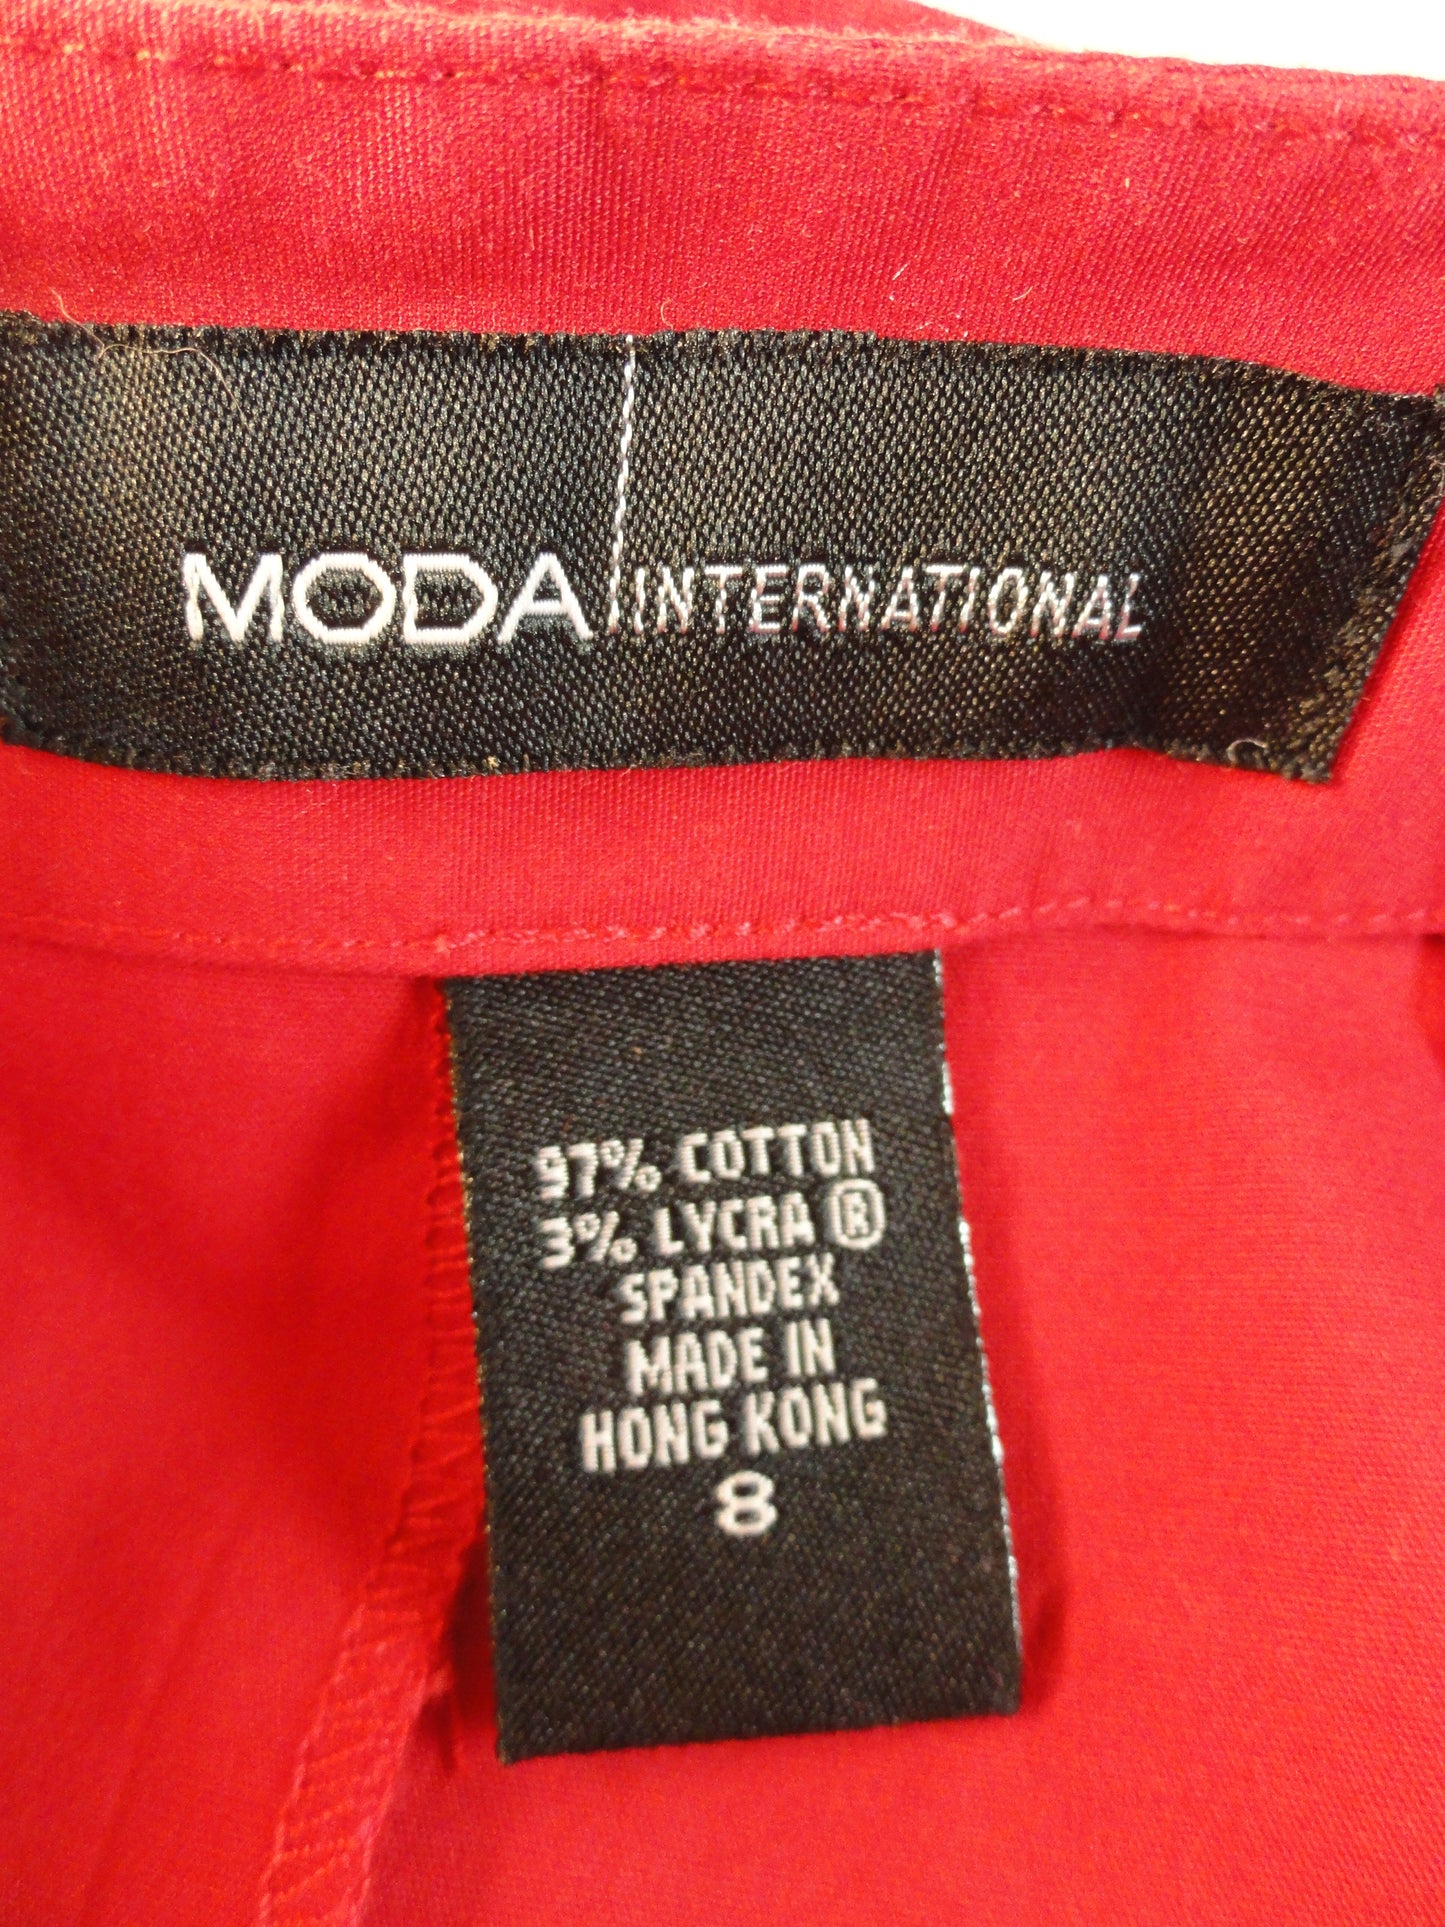 Moda International 80's Skirt Red Size 8 SKU 000054